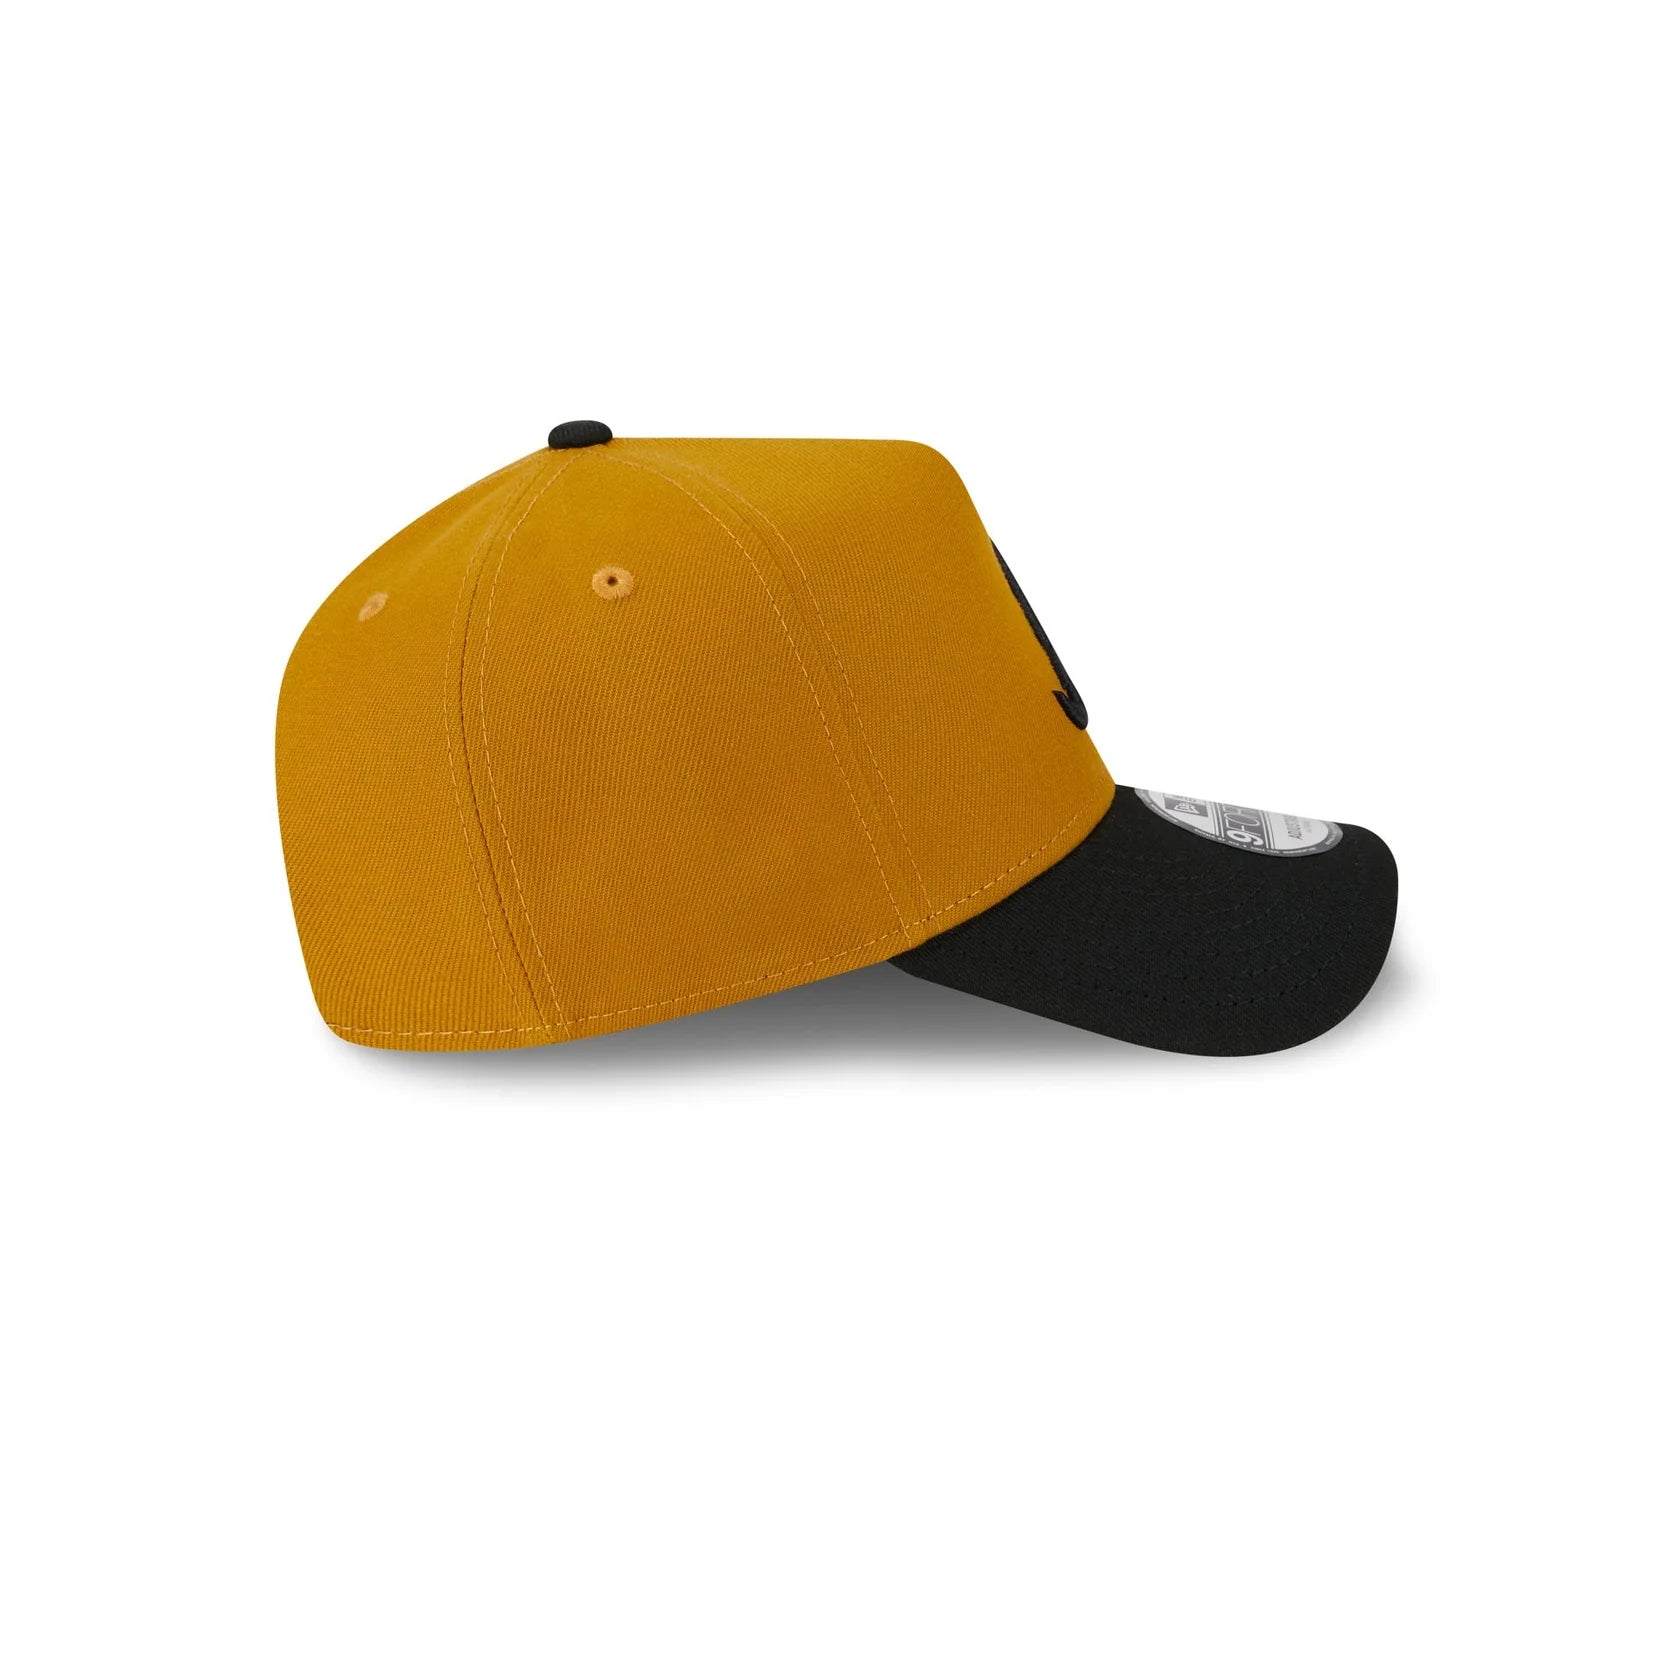 New Era Atlanta Braves Rustic Fall A Frame 9forty Adjustable Hat -